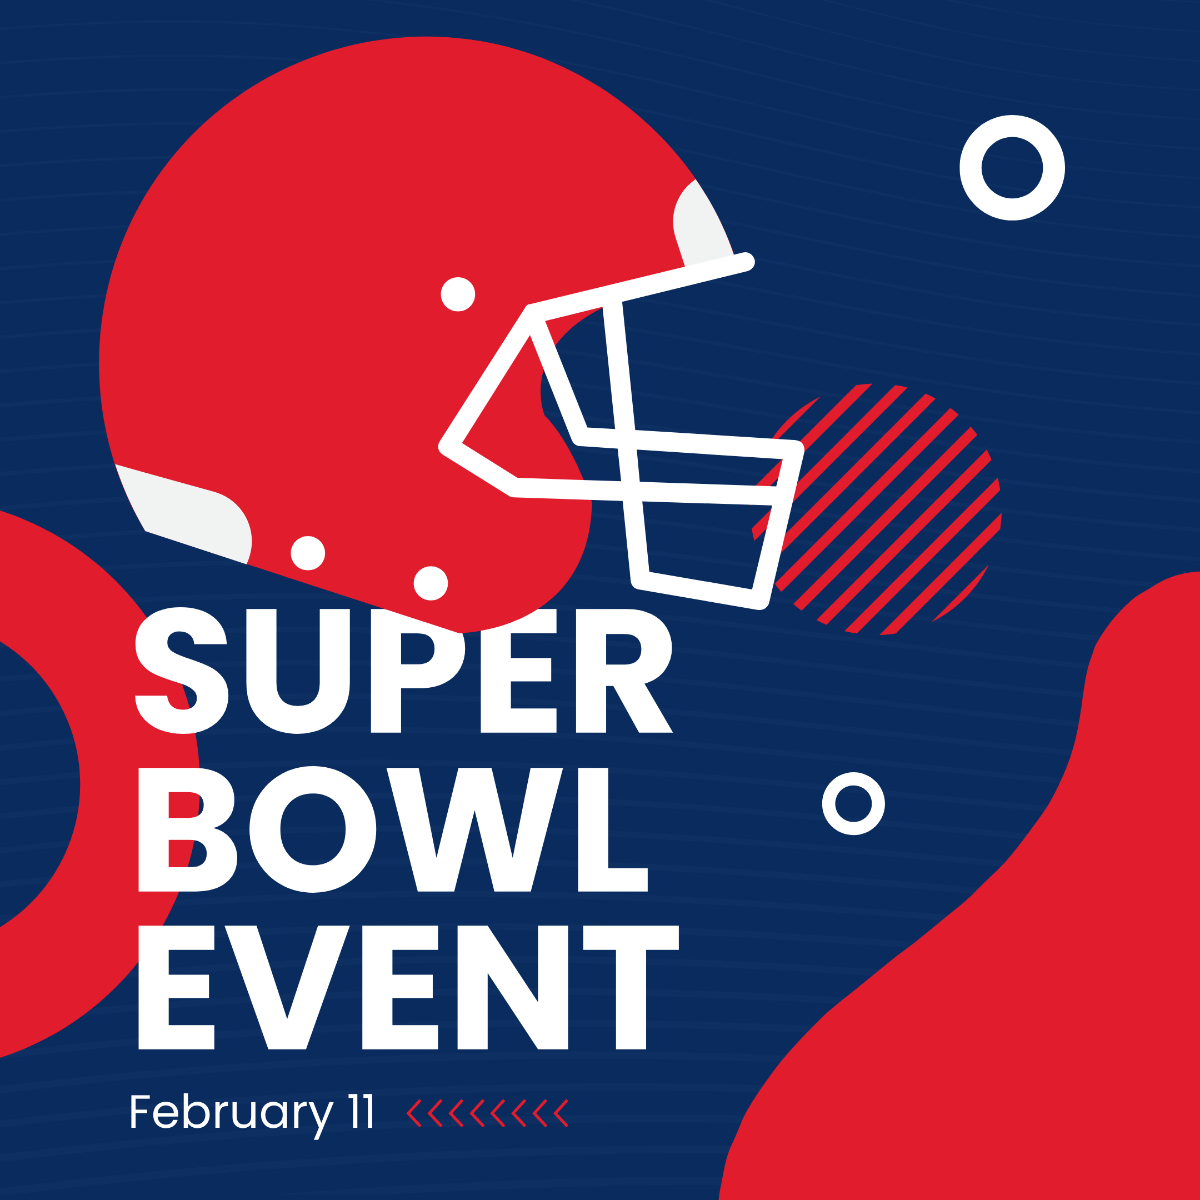 Super Bowl Event Instagram Post Template